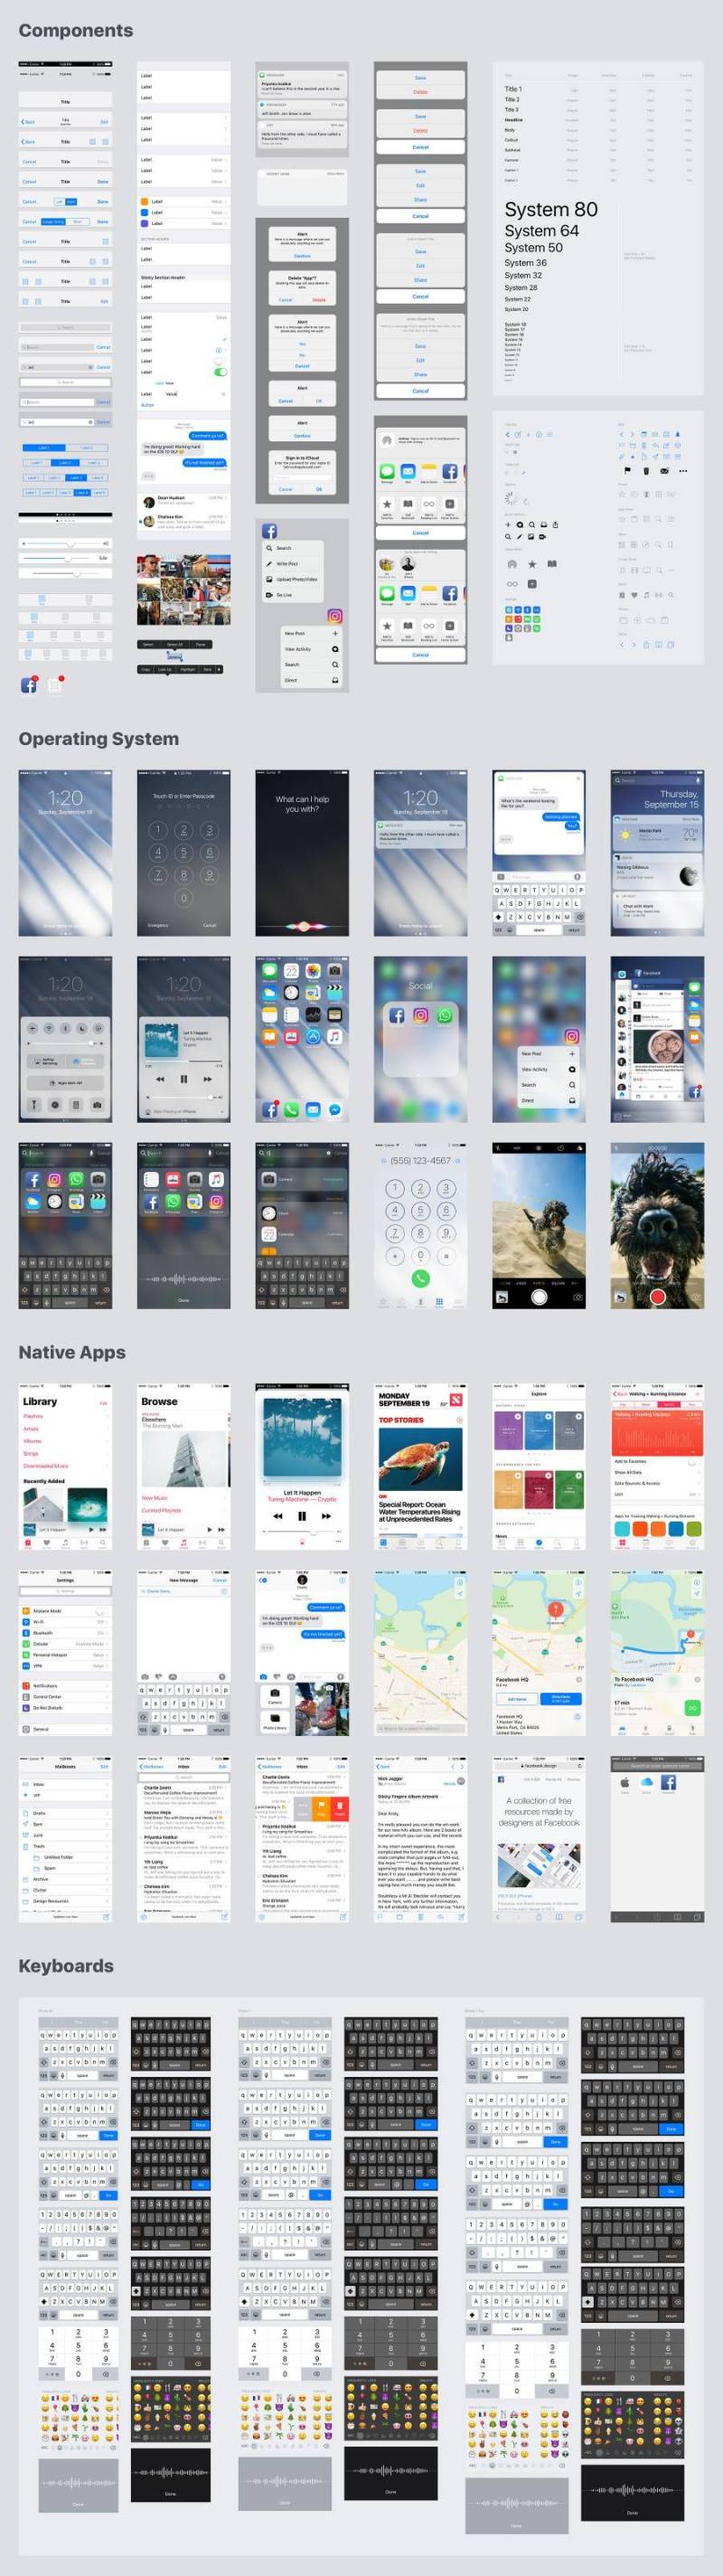 Facebook iOS 10 GUI